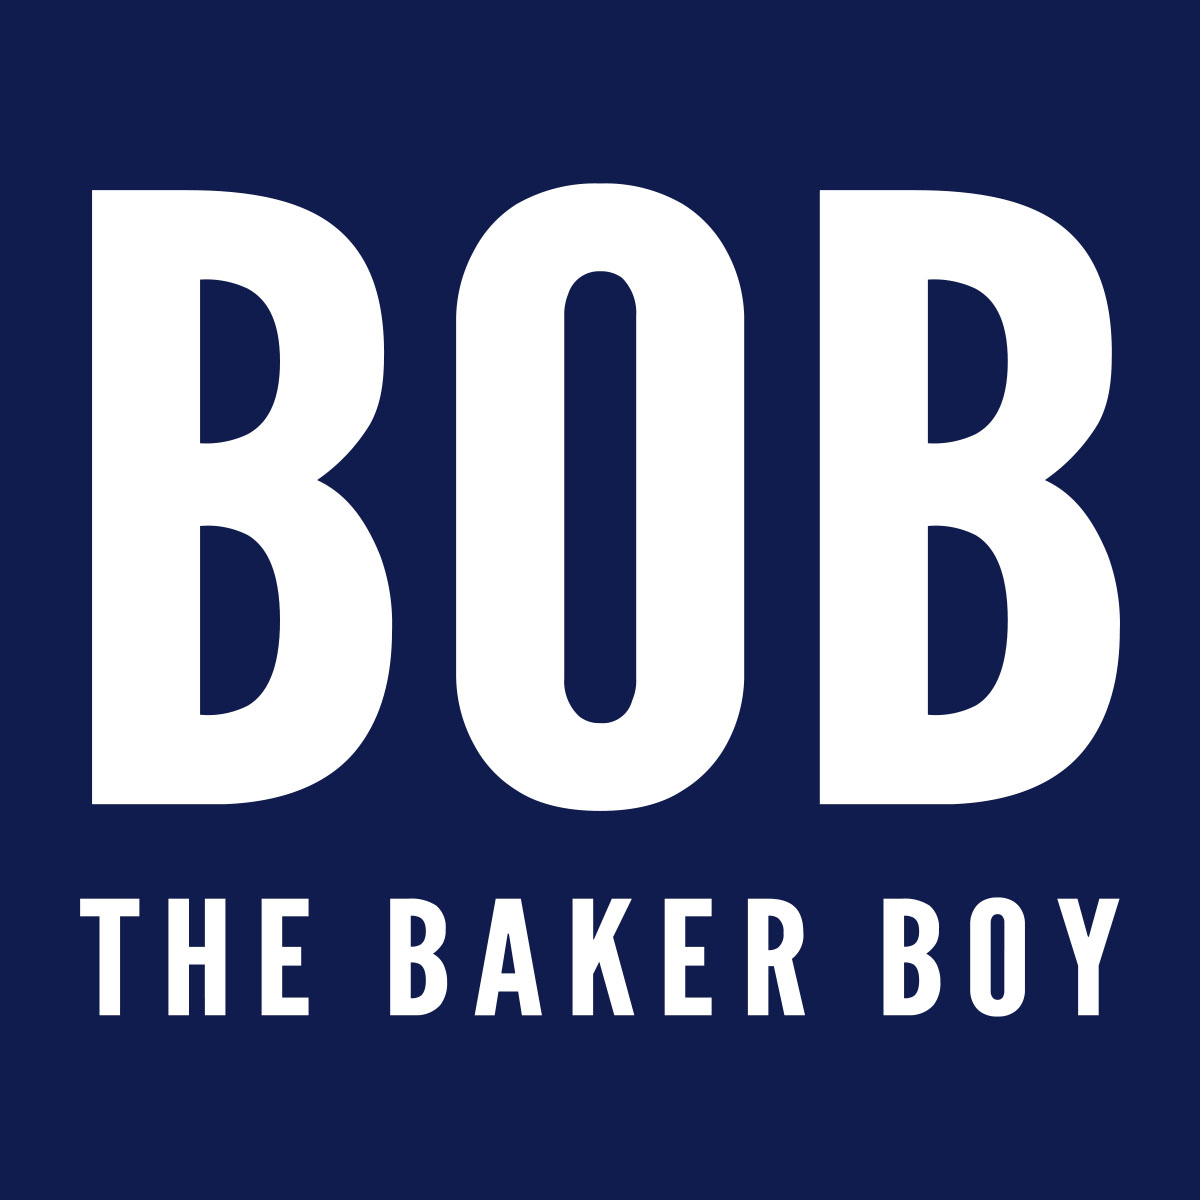 Default Bob the baker boy image